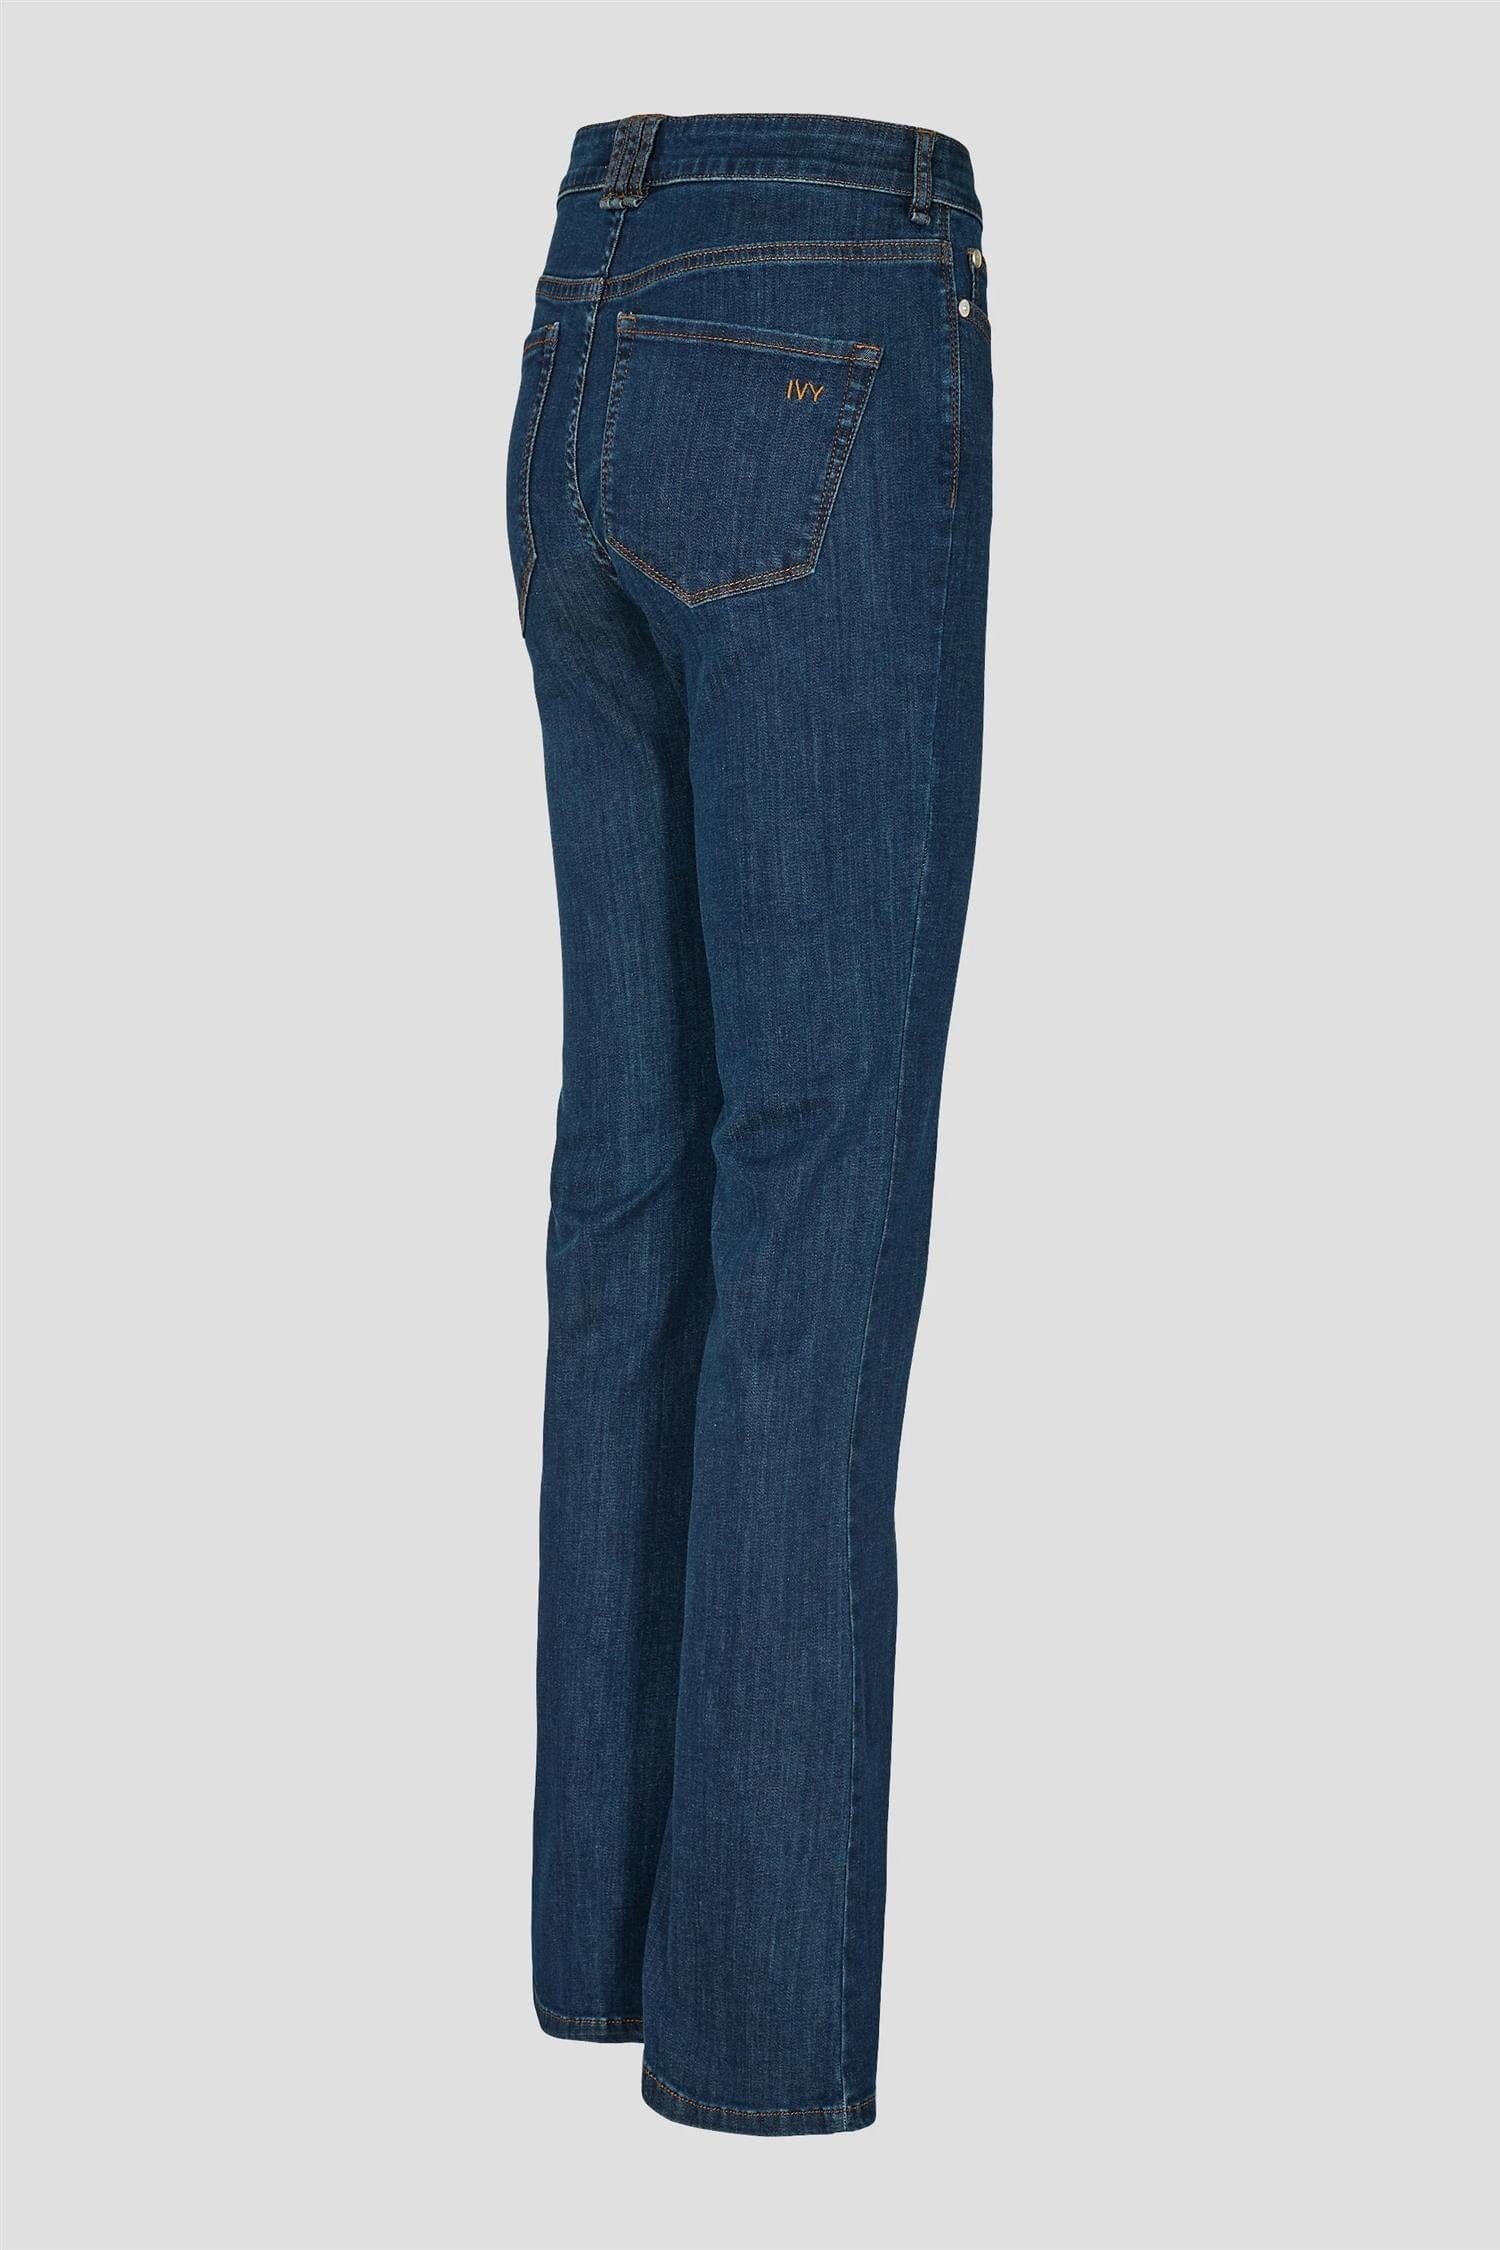 Ivy Copenhagen Tara Jeans Wash Excl. Blue Denim Blue Bukse